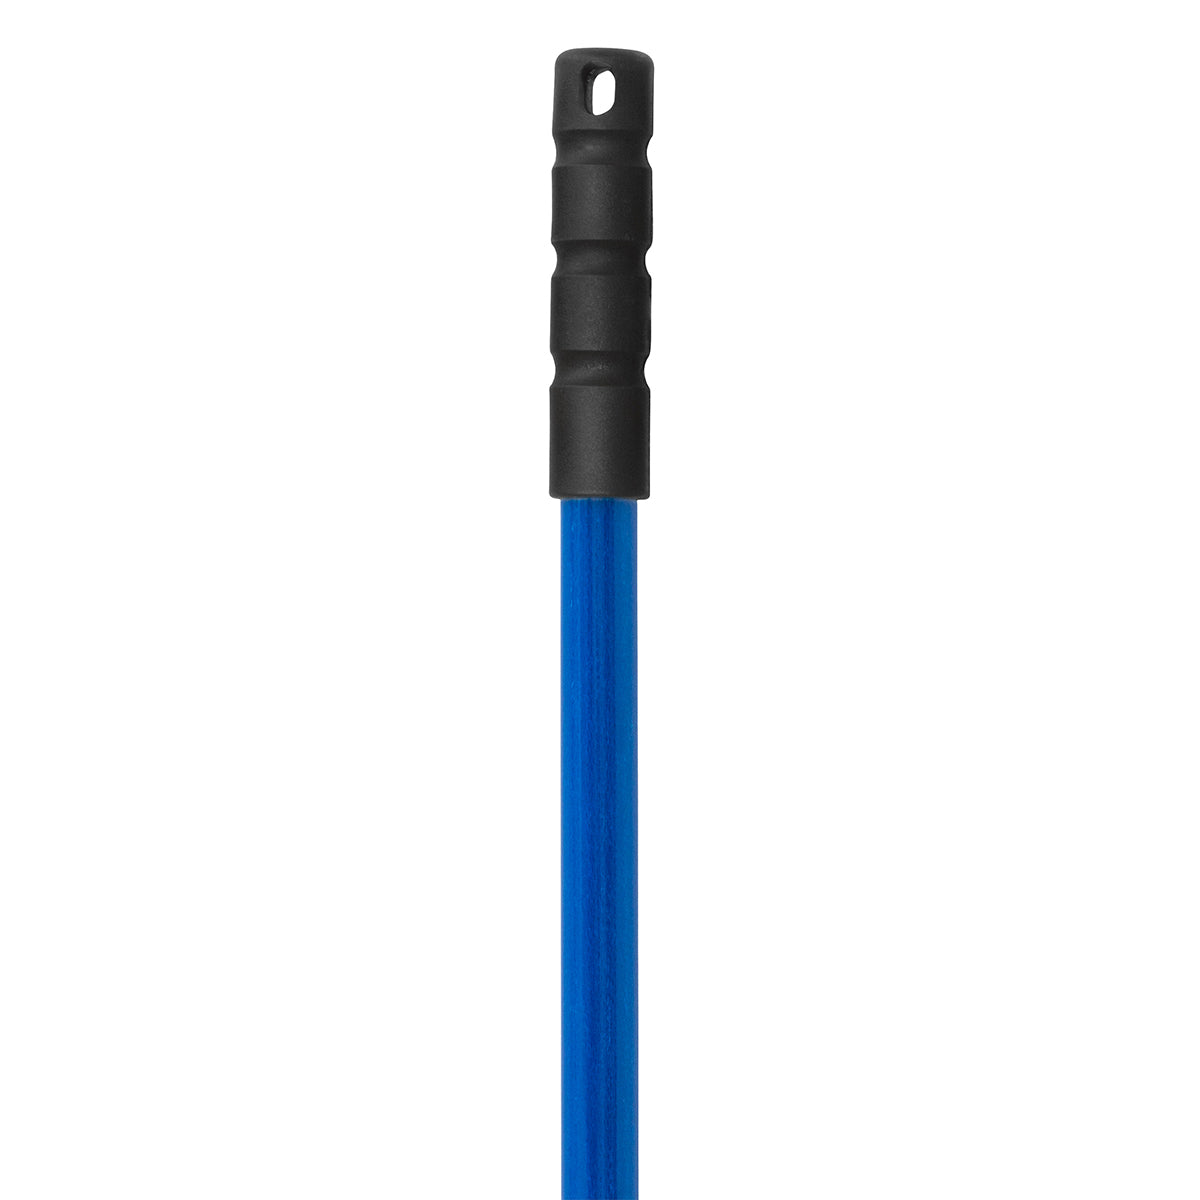 Baston de Fibra de Vidrio 1.5 Metros de Largo Color Azul